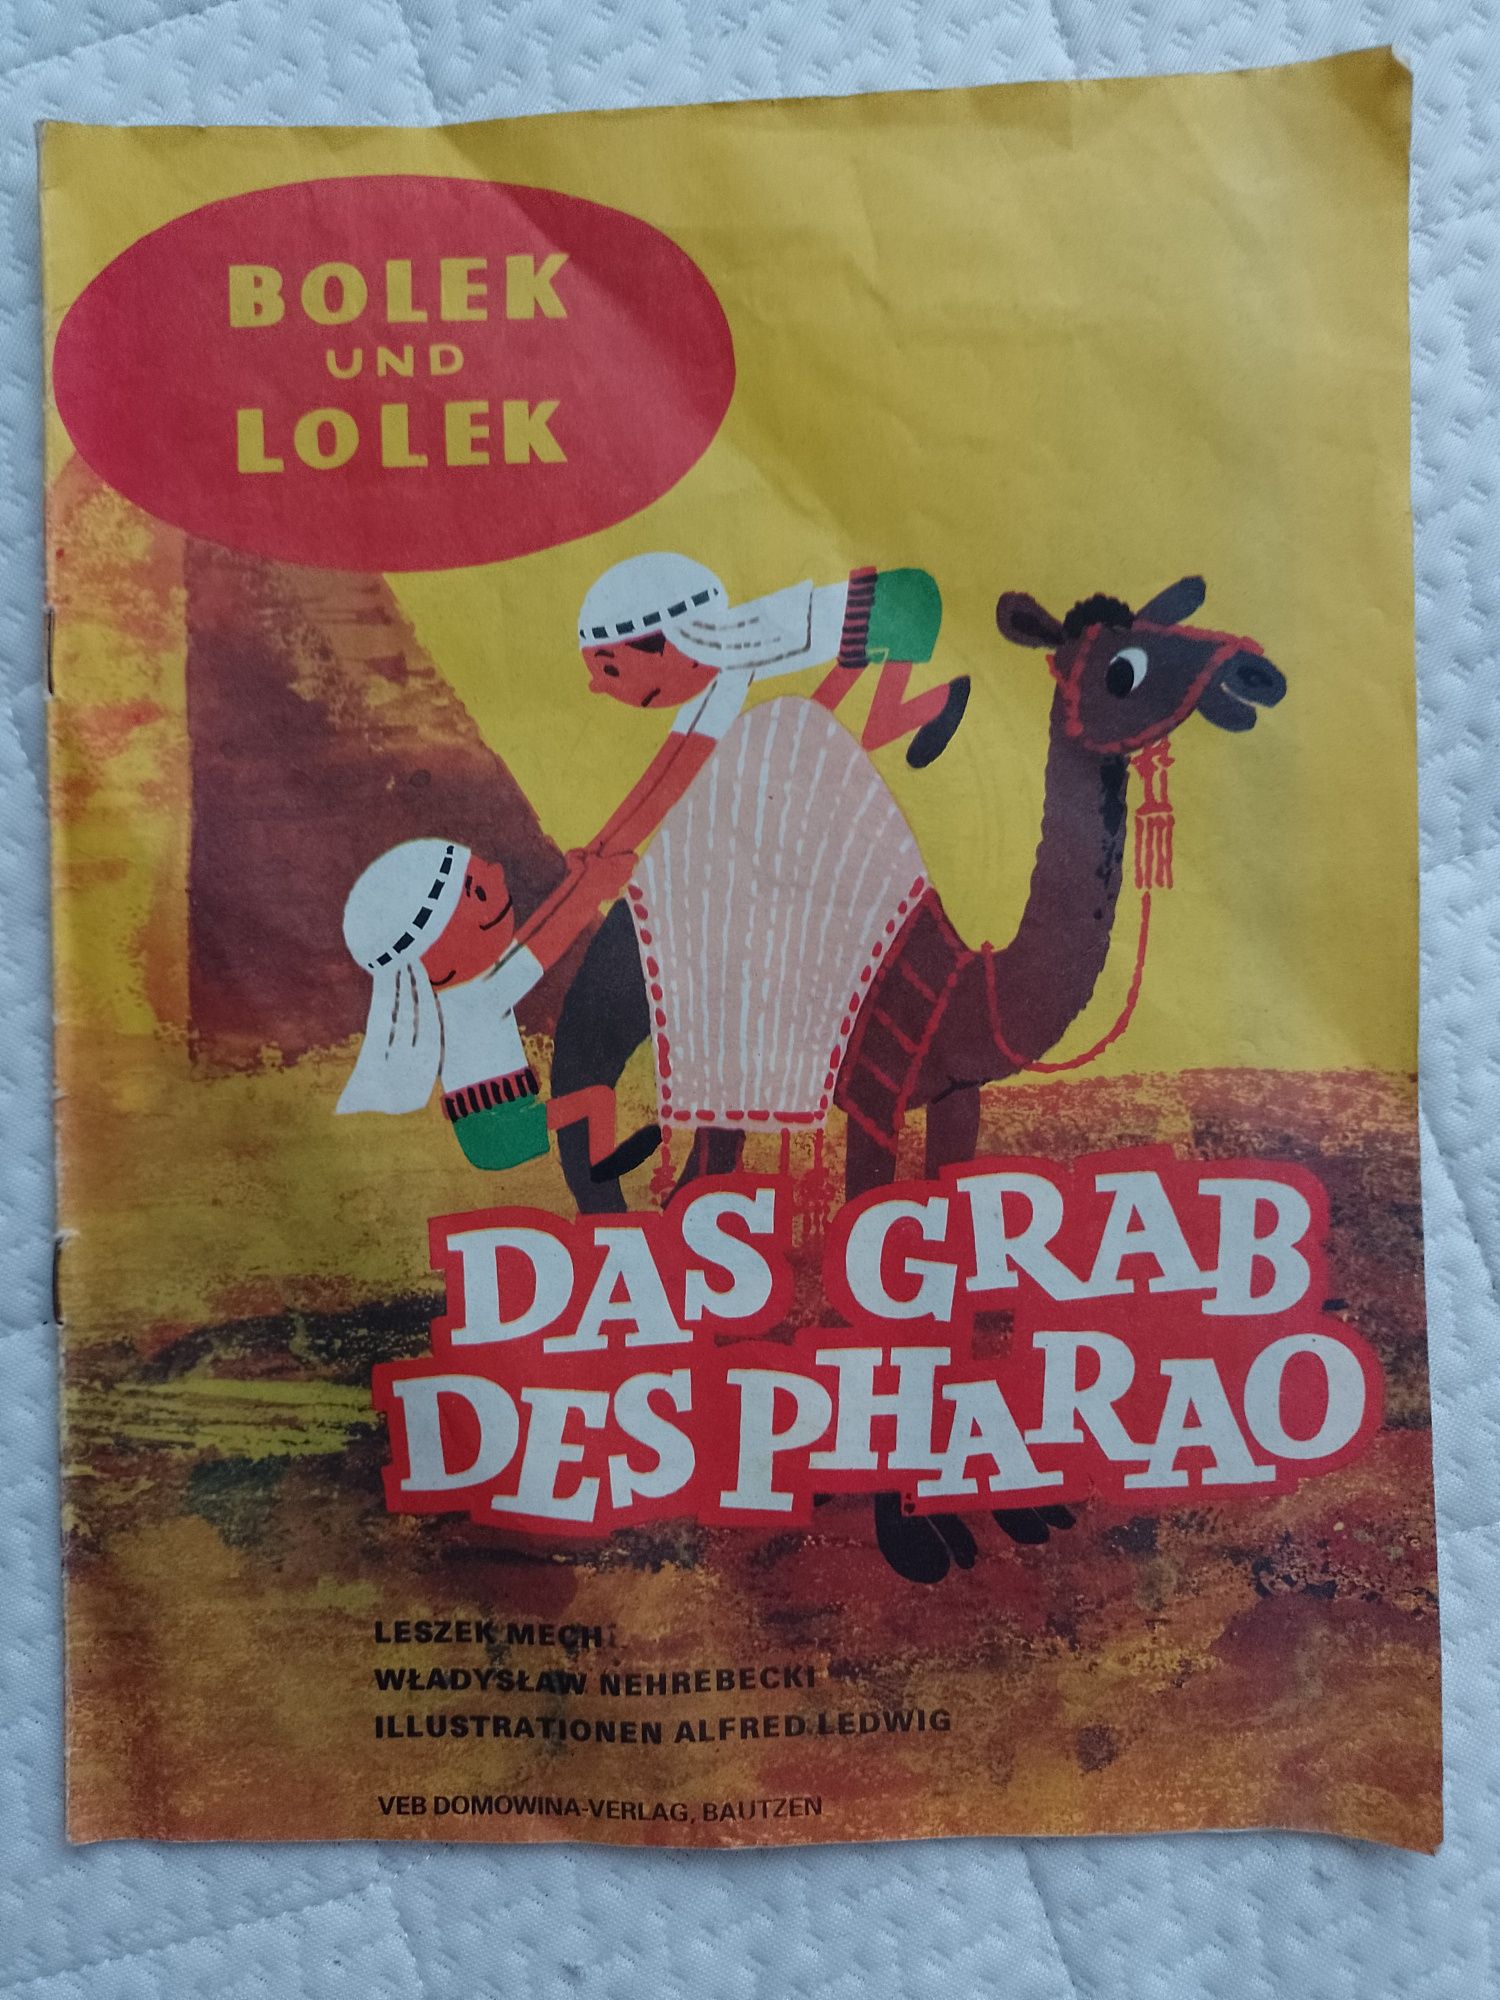 Komiks Bolek i Lolek grab des pharao po niemiecku 87 PRL